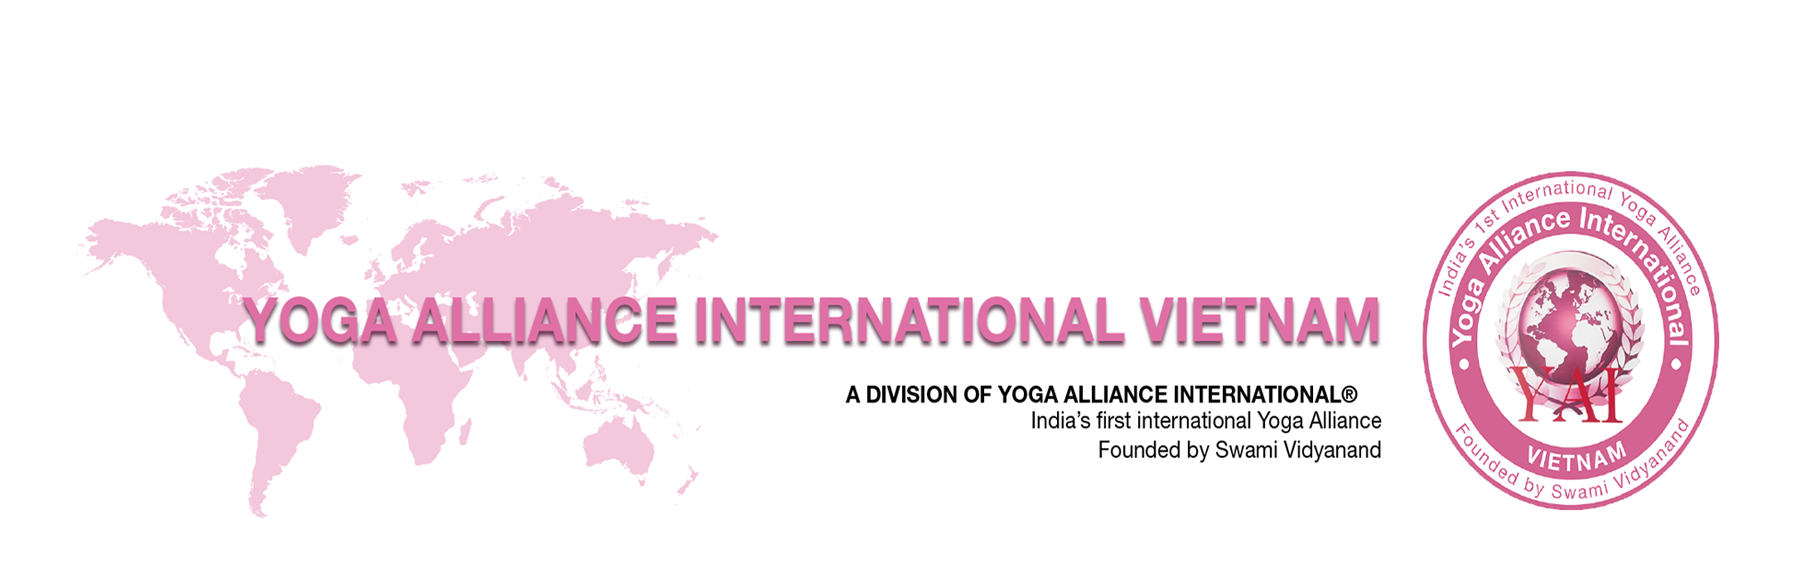 Yoga Alliance International Vietnam